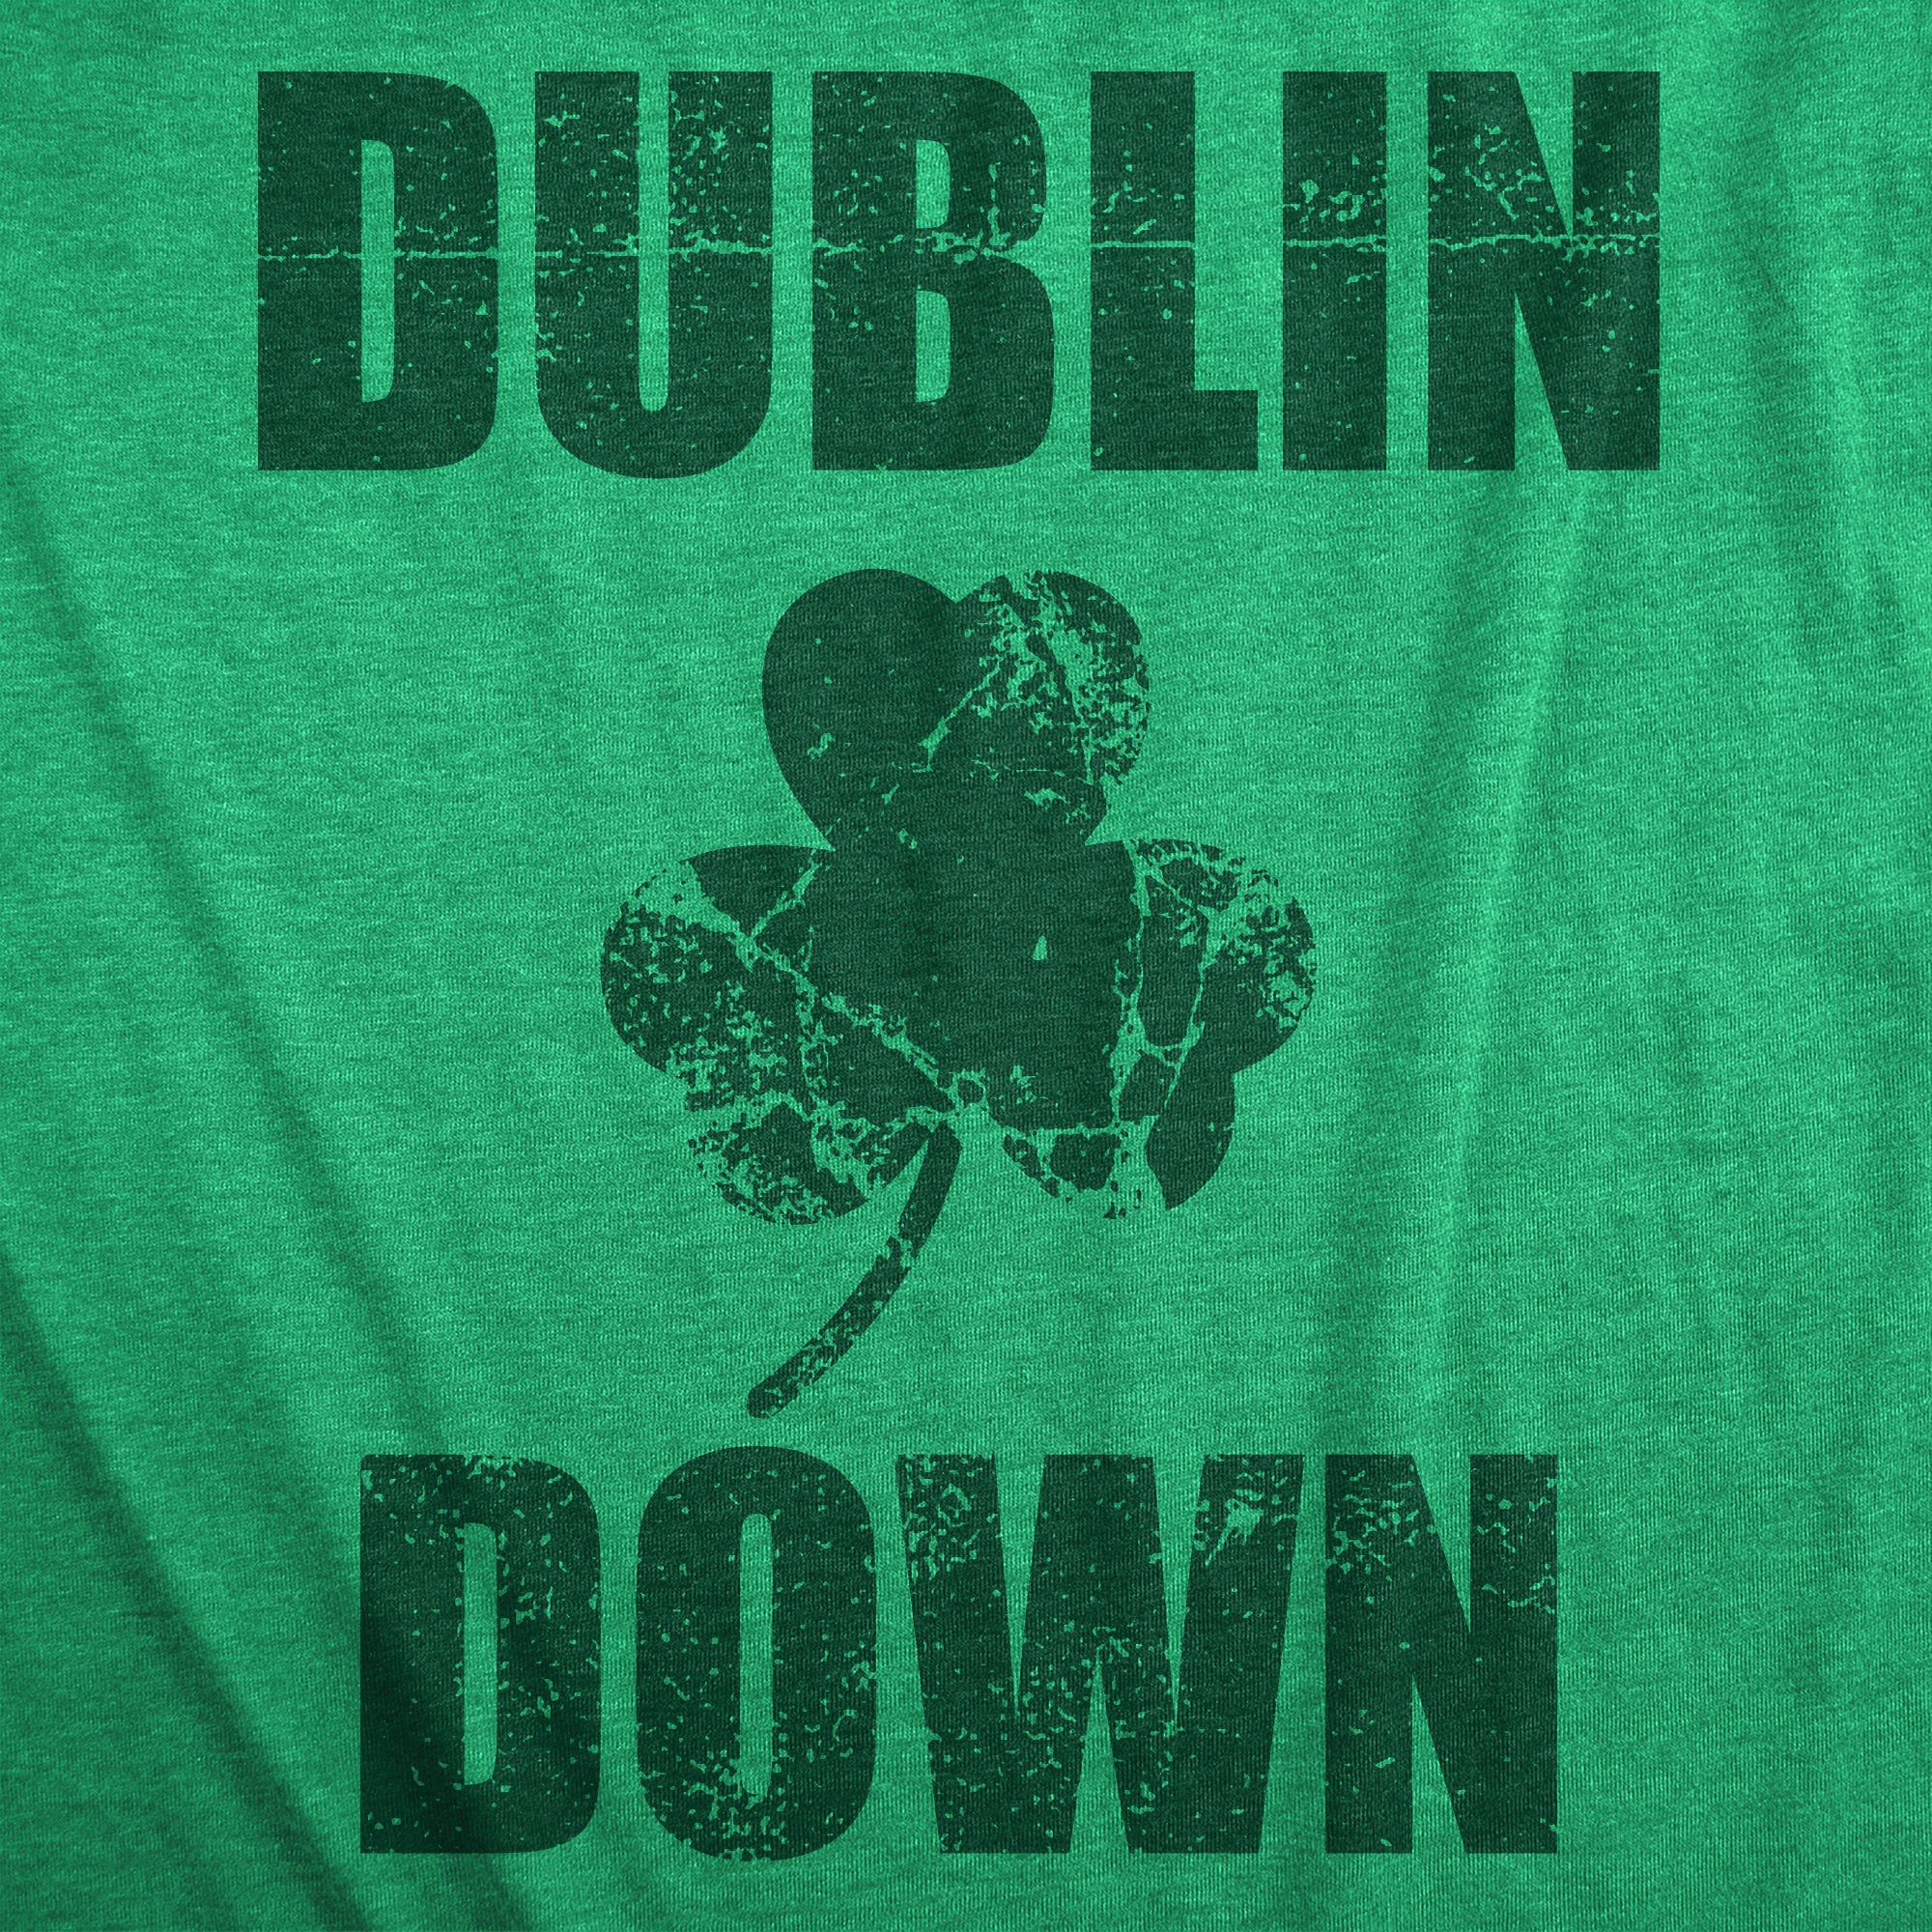 Funny Heather Green - Dublin Down Dublin Down Mens T Shirt Nerdy Saint Patrick's Day Tee